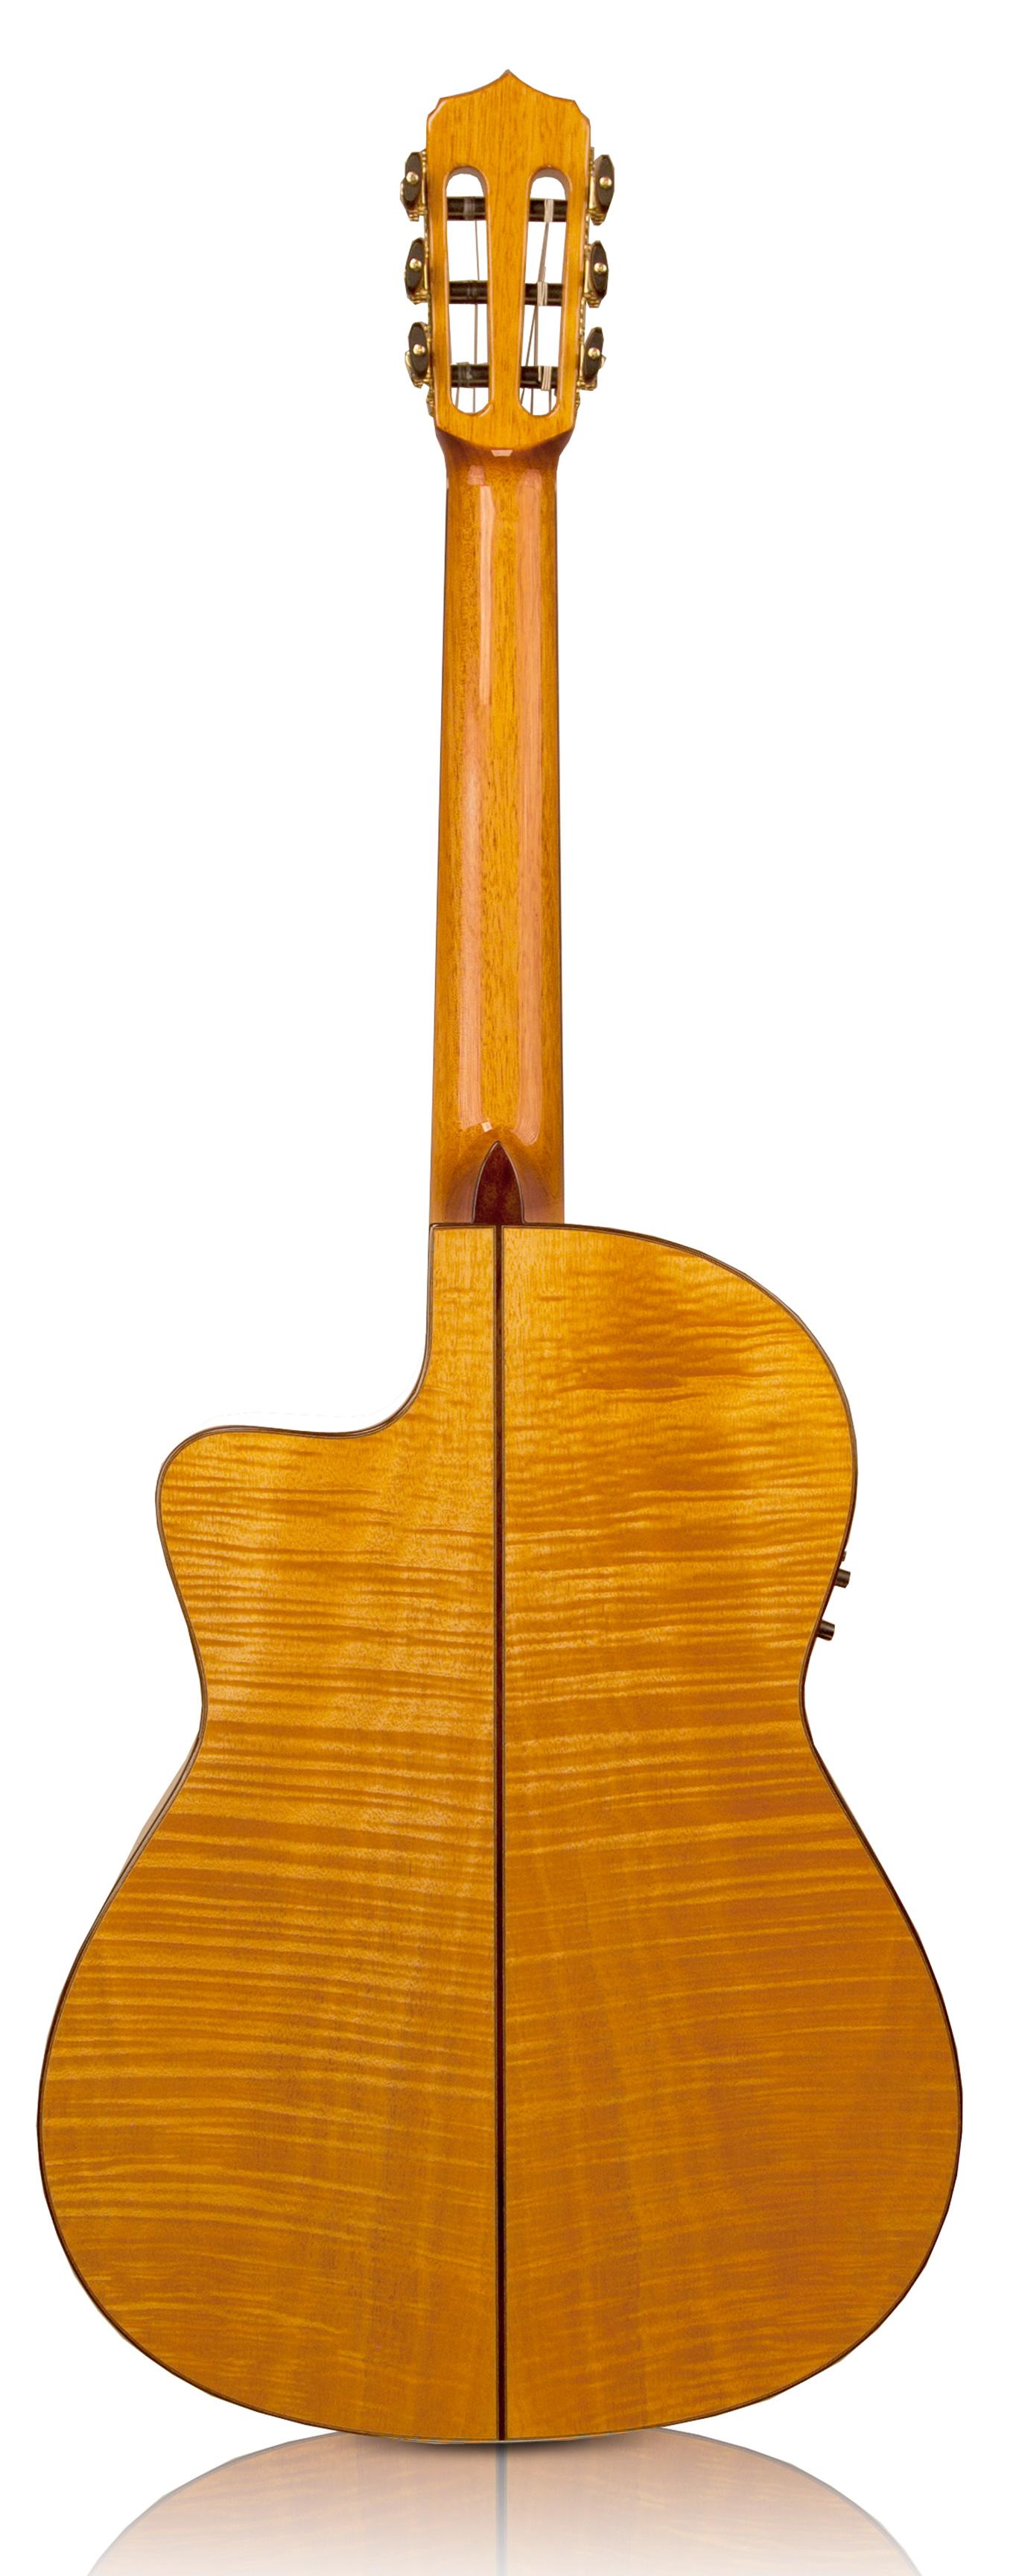 Cordoba Fusion 14 Maple - Natural - Classical guitar 4/4 size - Variation 3